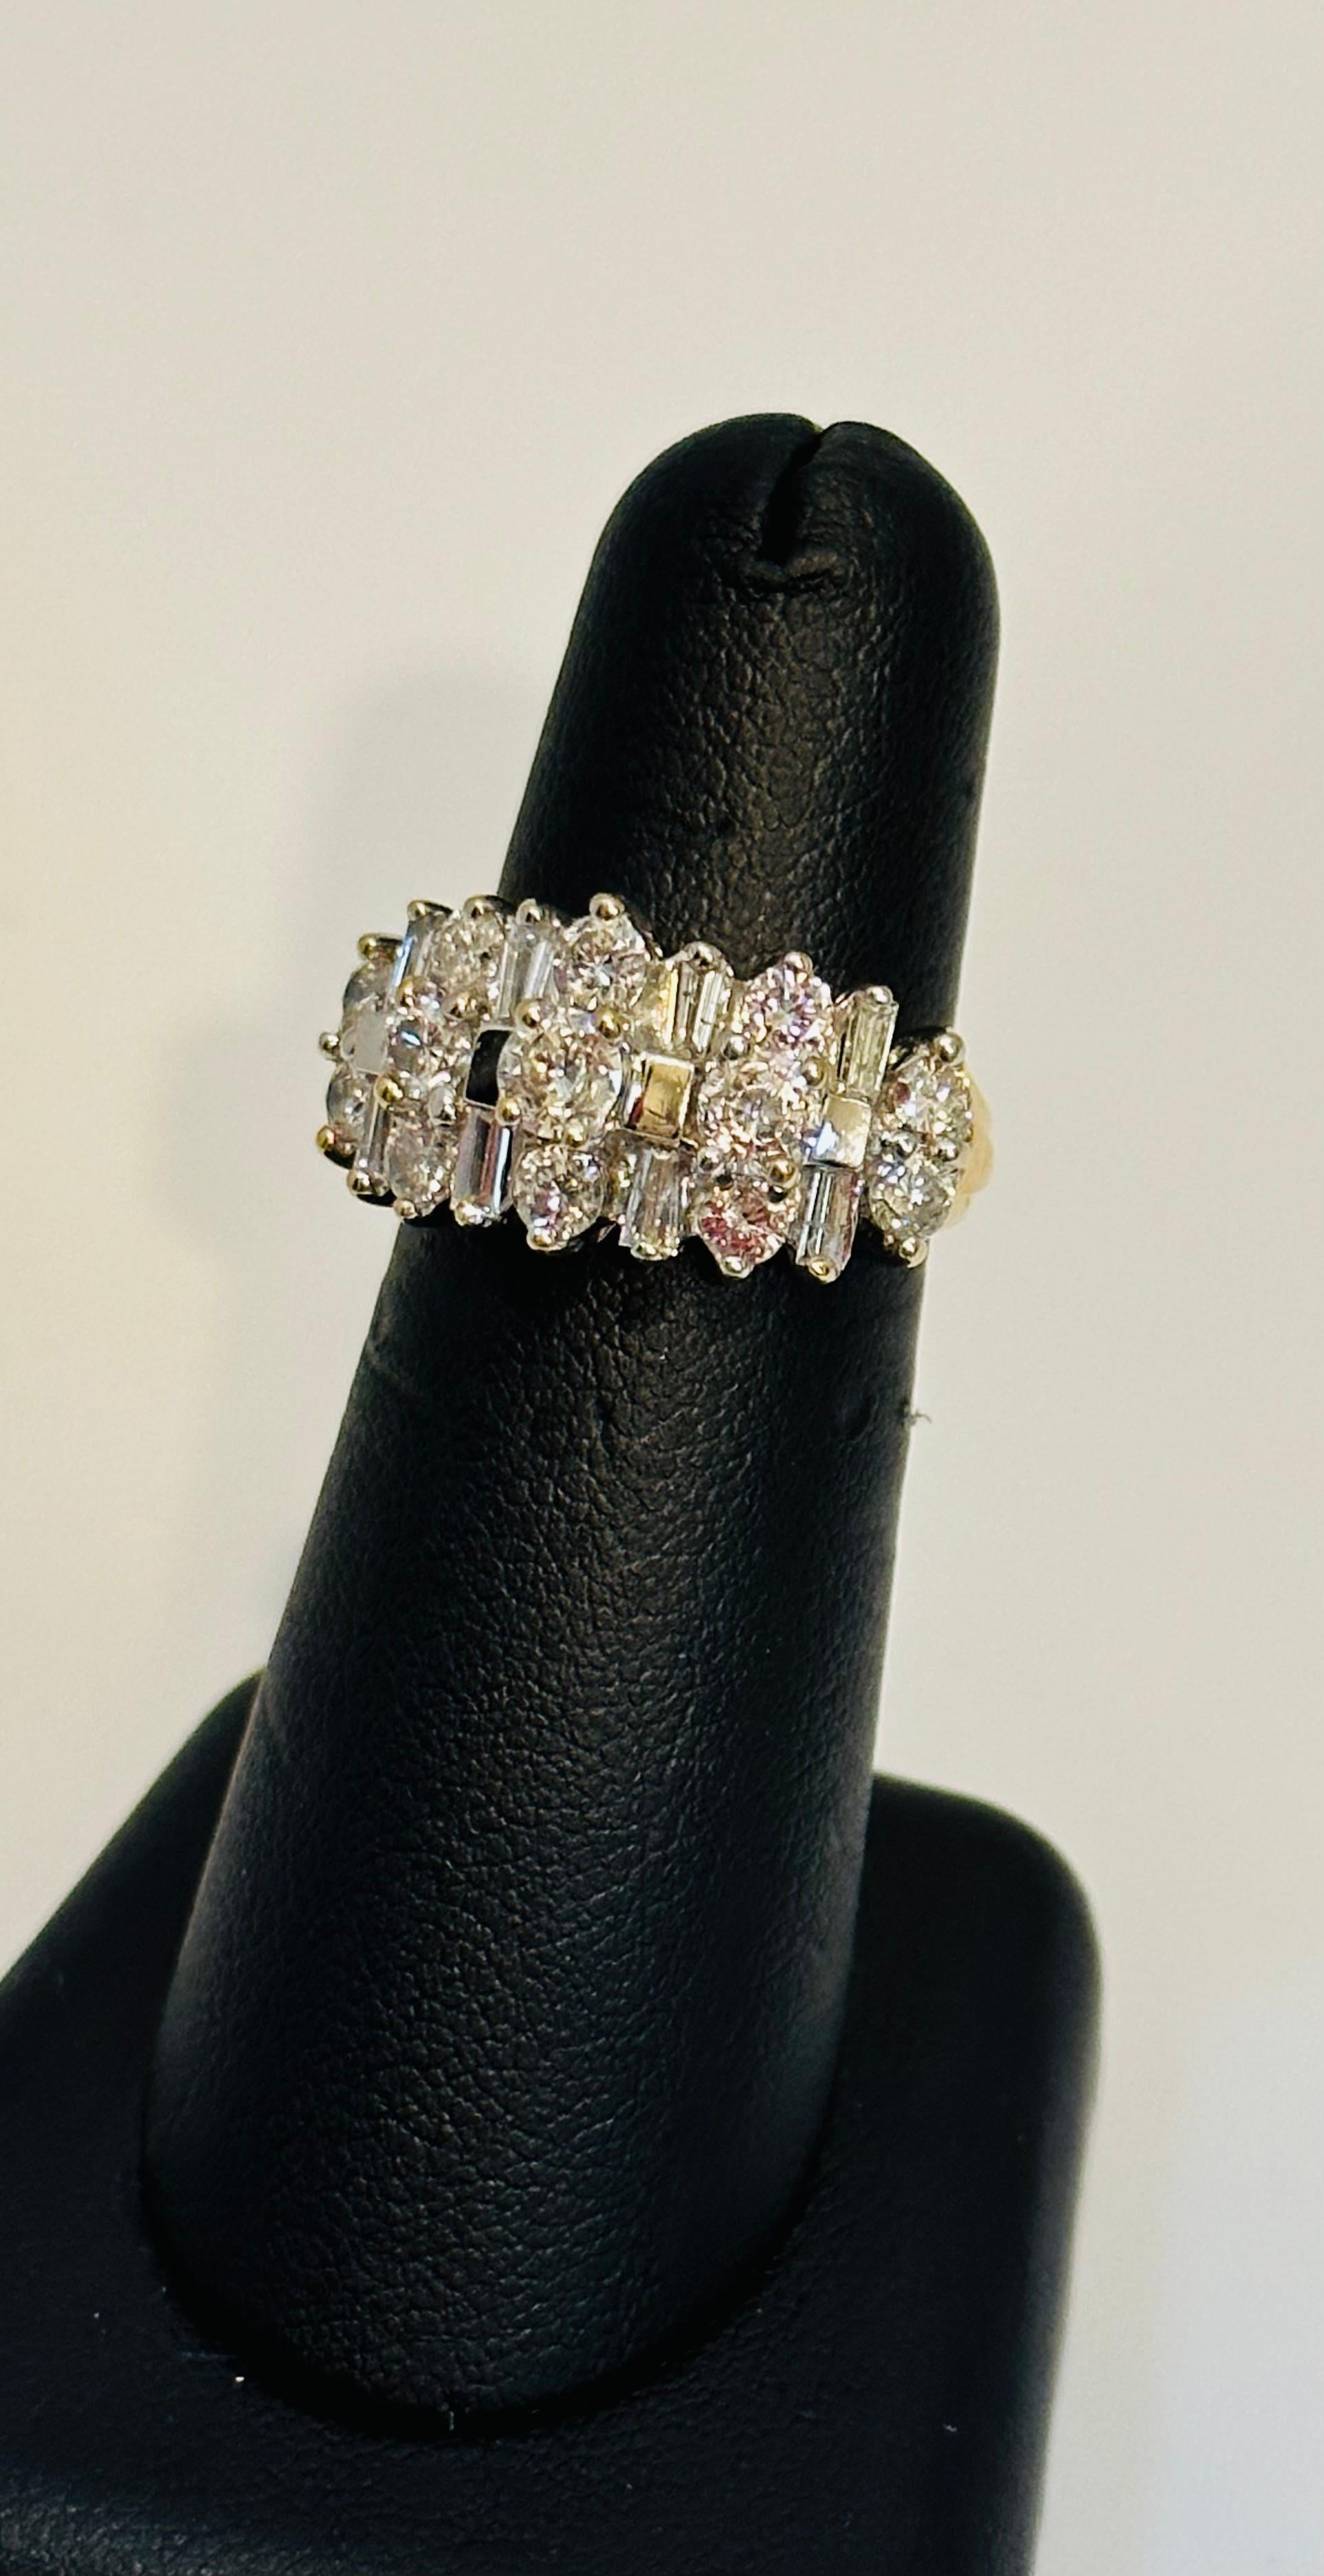 Women's 2.8 Carat Round & Baguettes Diamond Ring in 14 Karat White Gold Size 6 For Sale